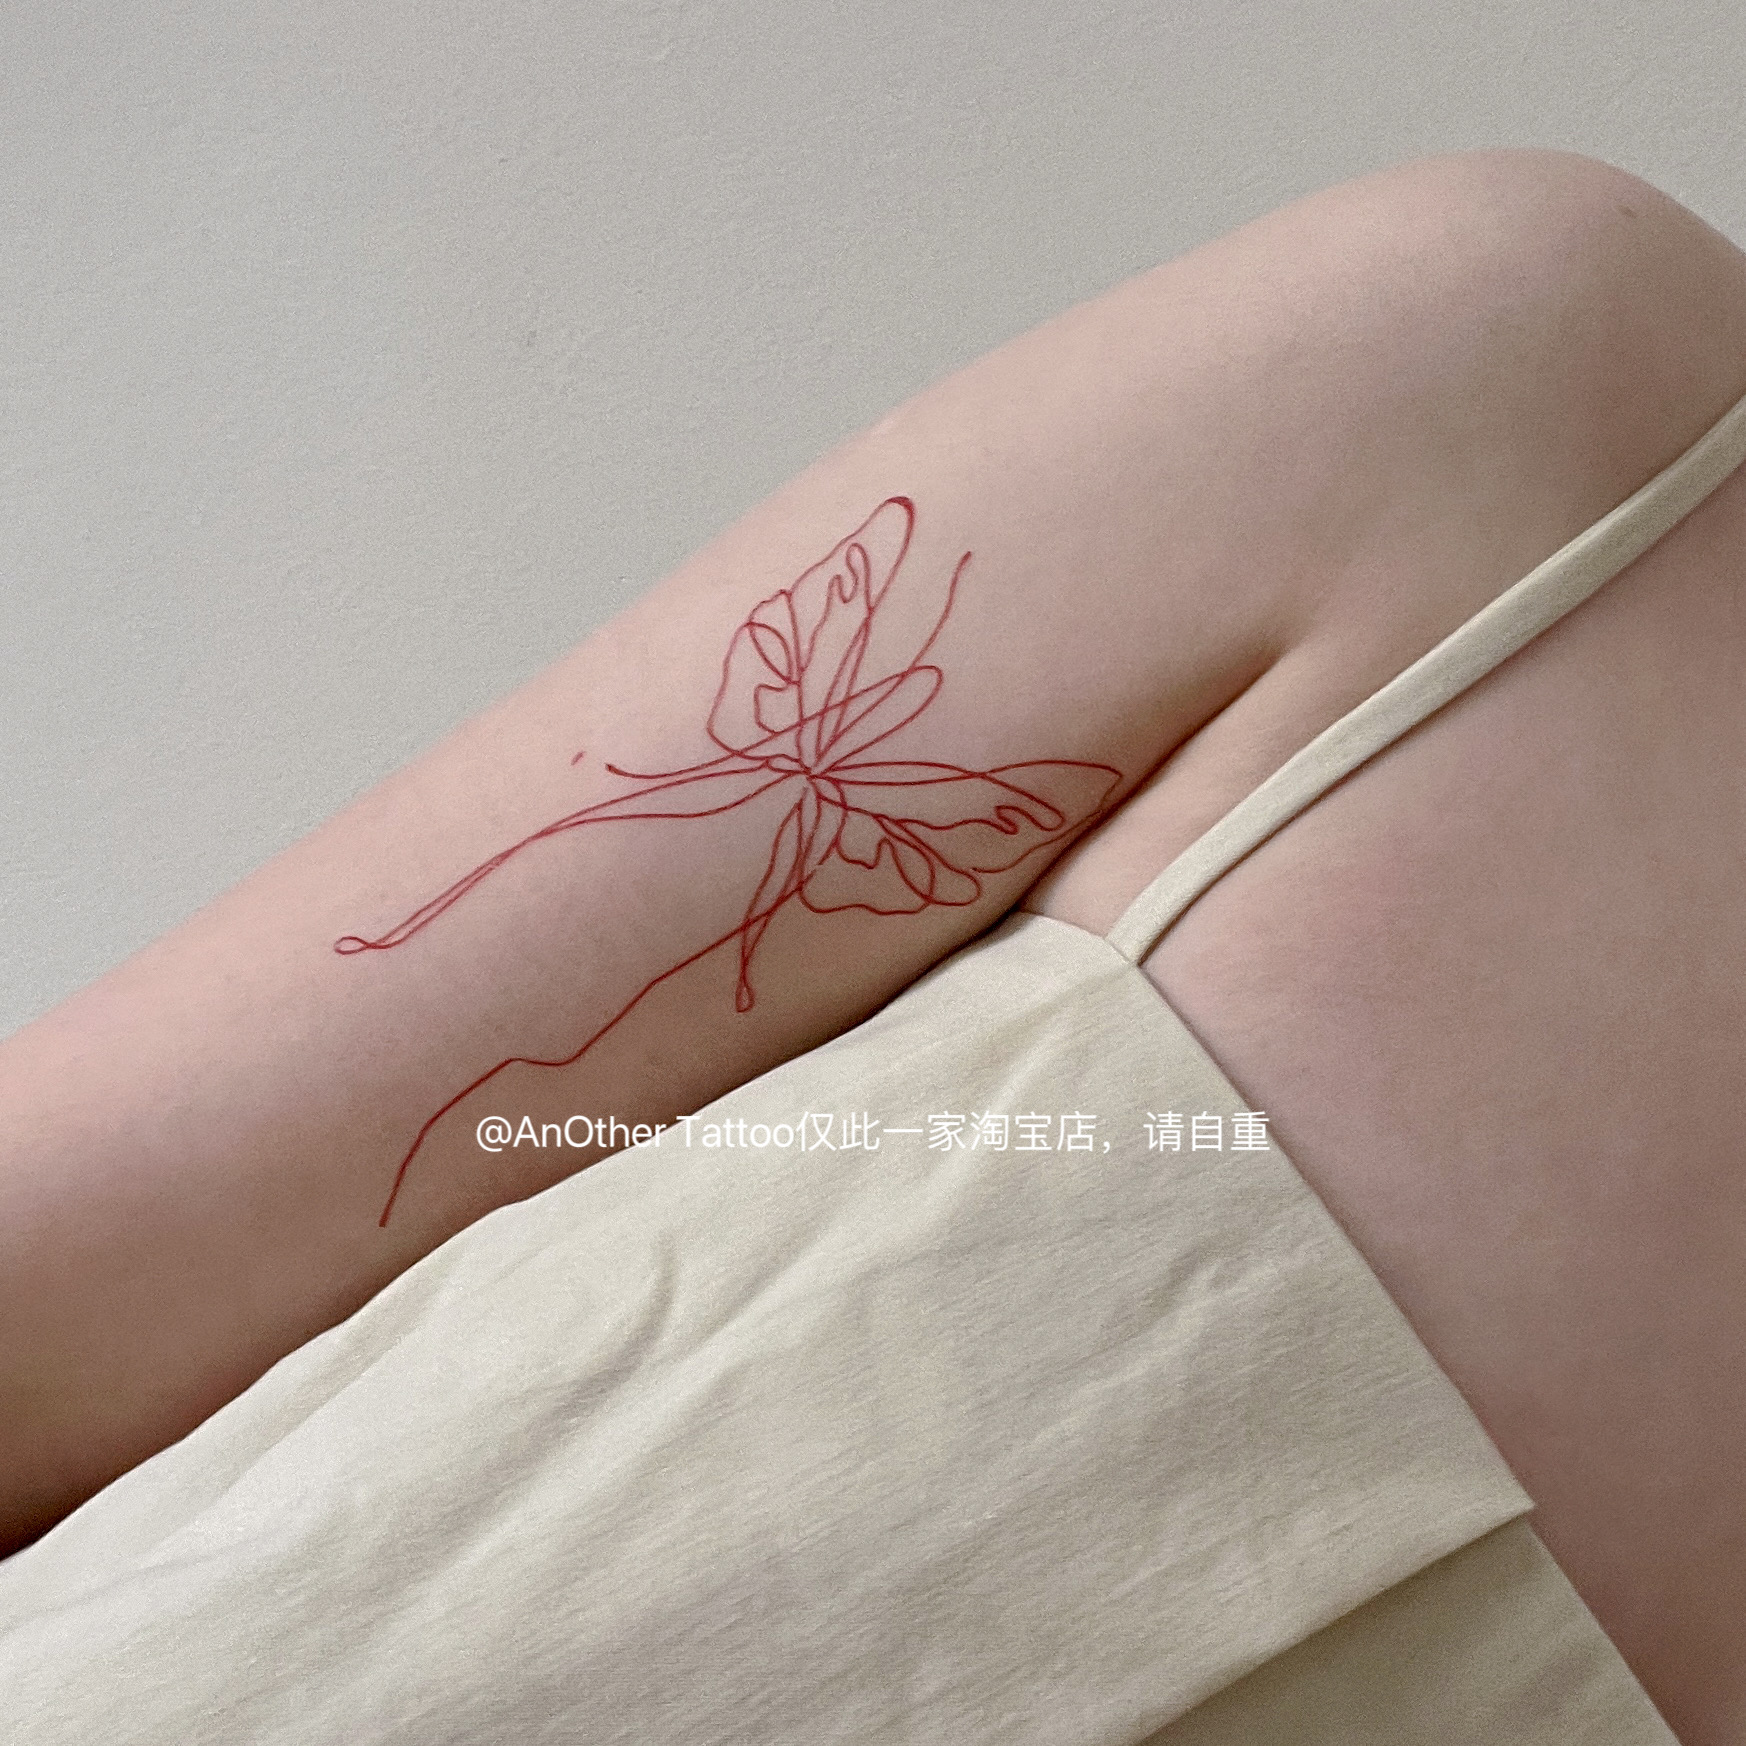 AnOther Tattoo红色性感线条纯欲风蝴蝶手臂女纹身贴买一送一防水